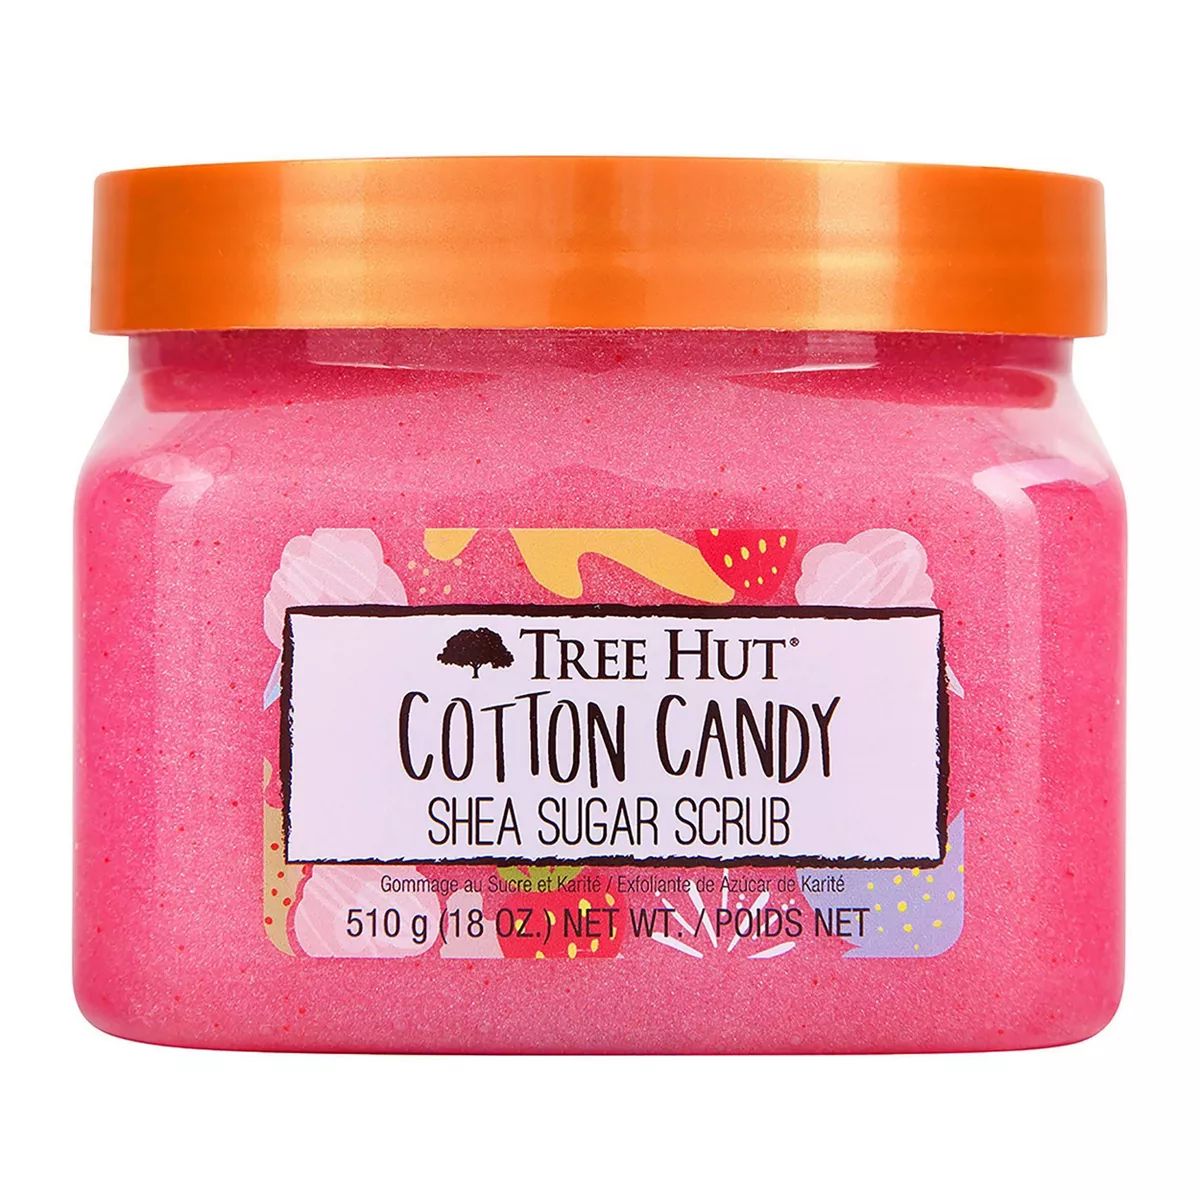 Tree Hut Cotton Candy Shea Sugar Body Scrub - 18 oz | Target